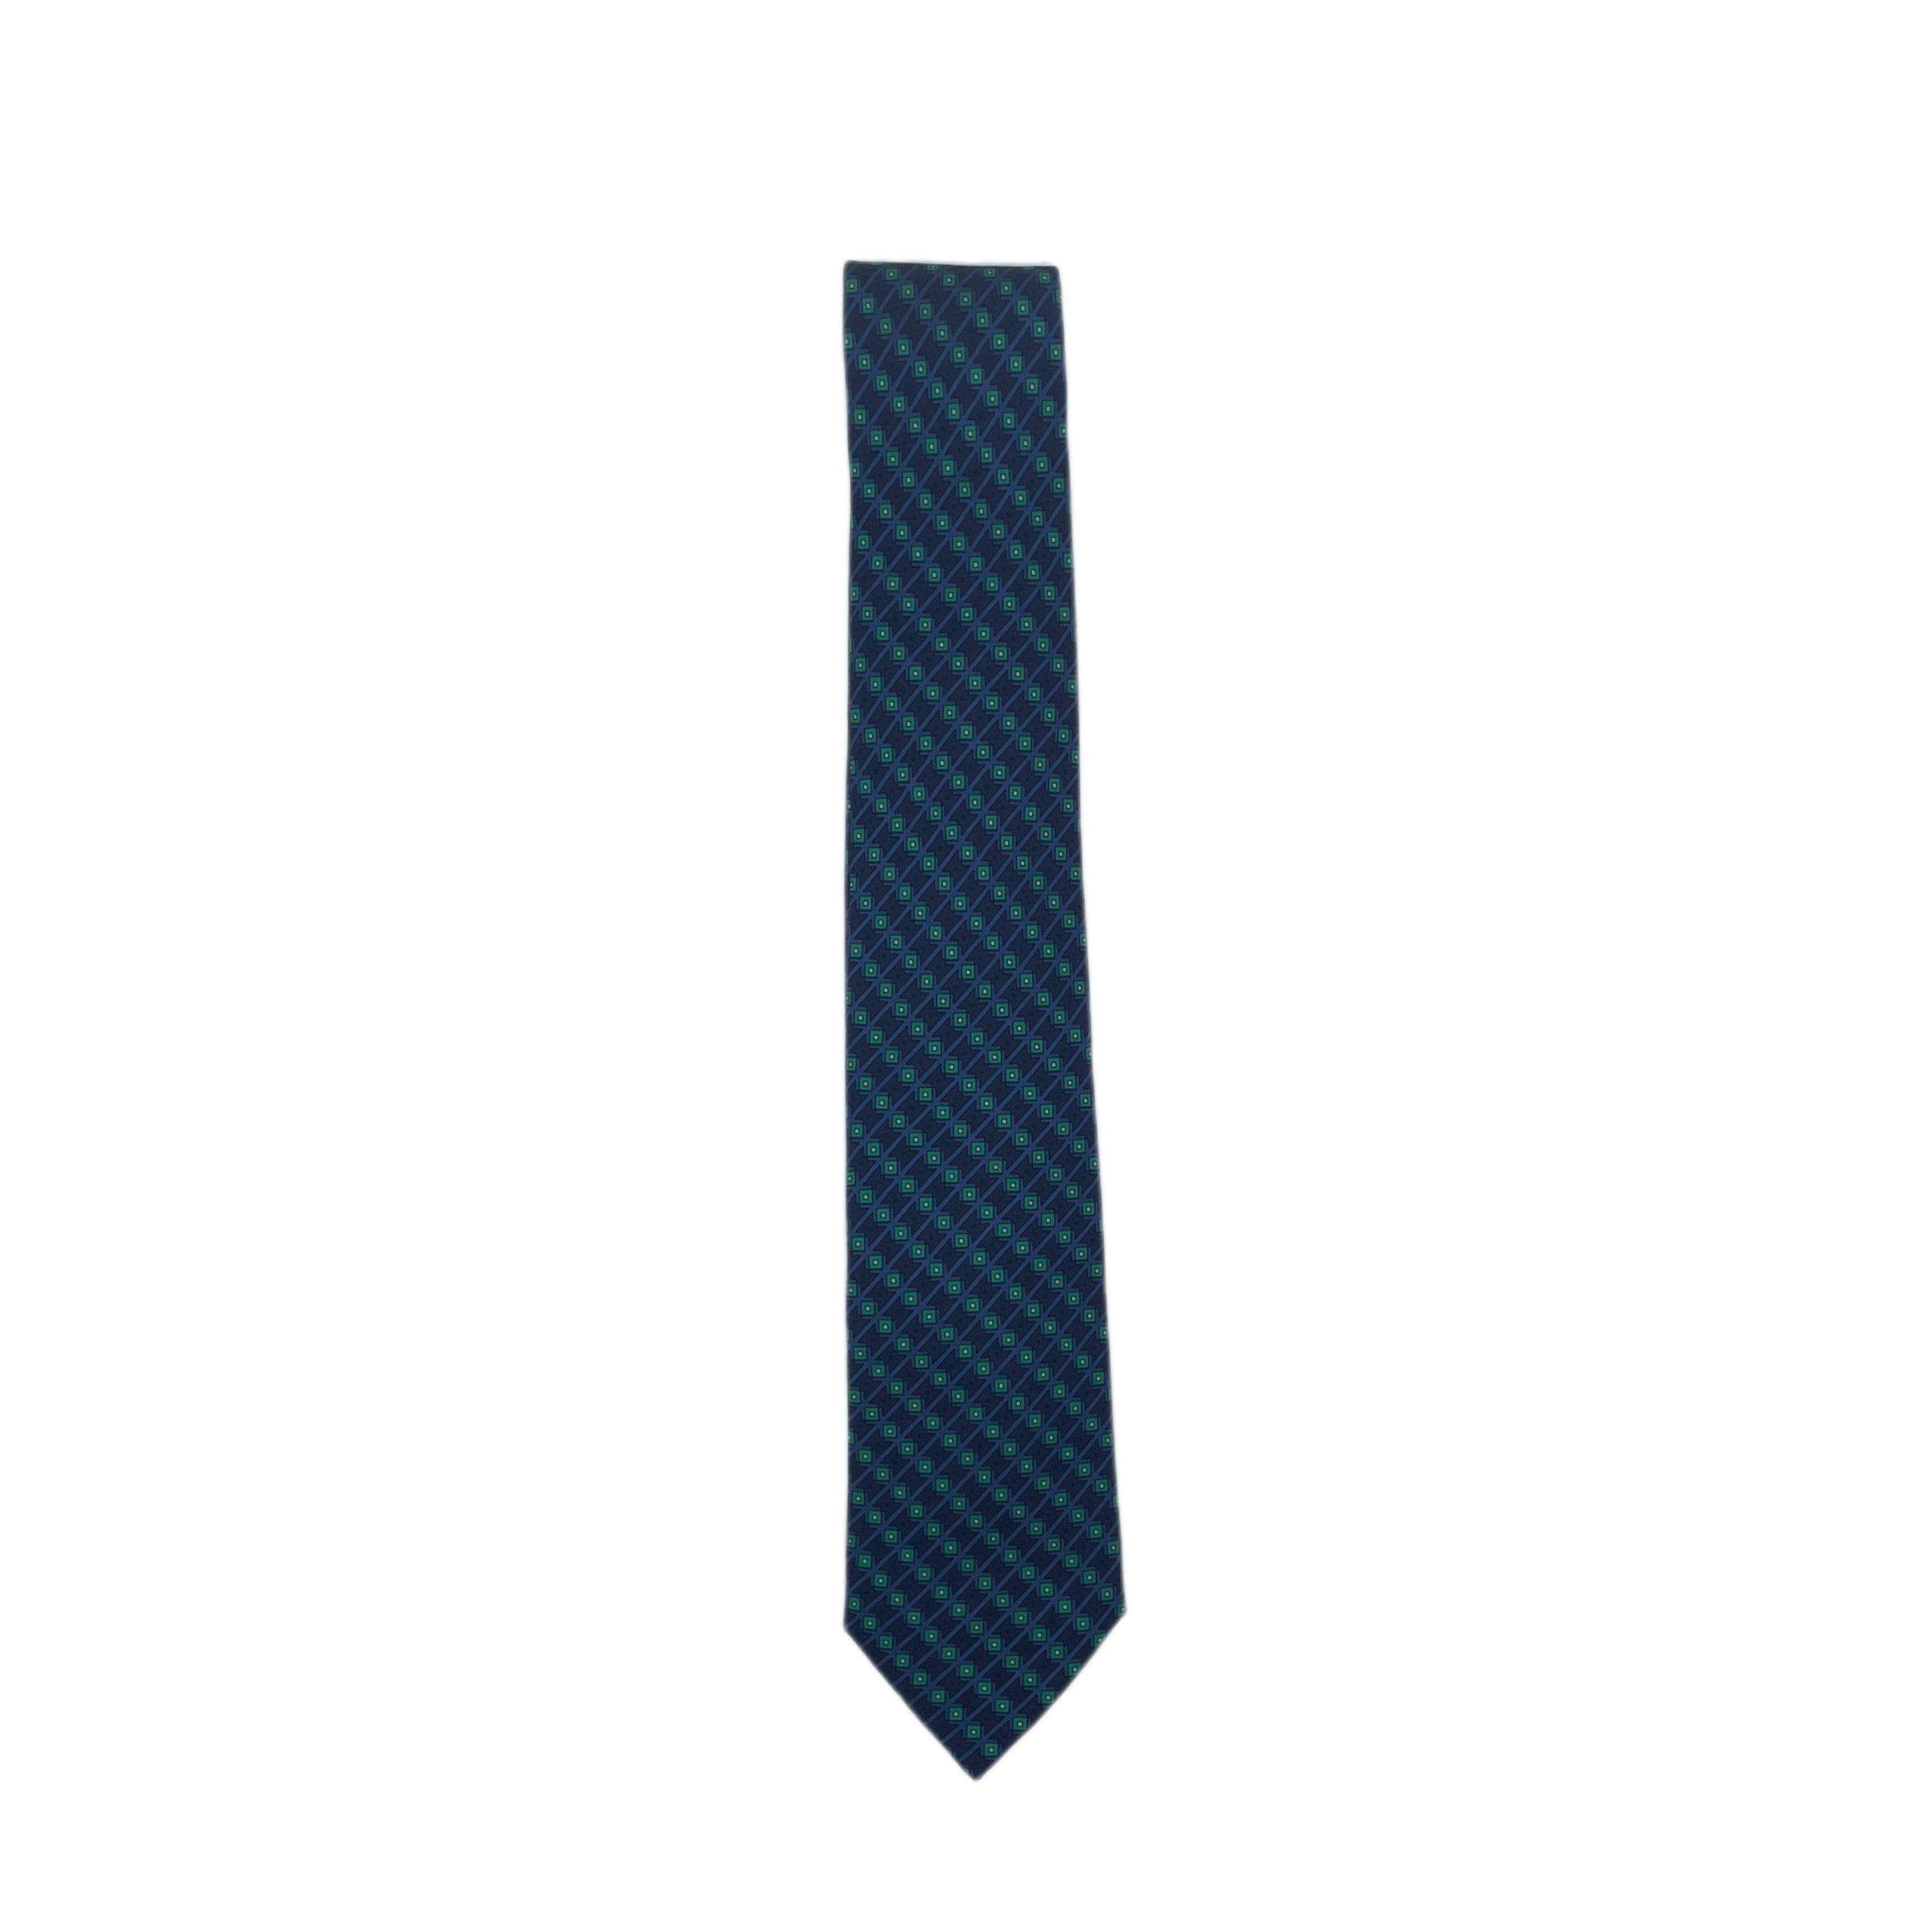 Hermes cravatta